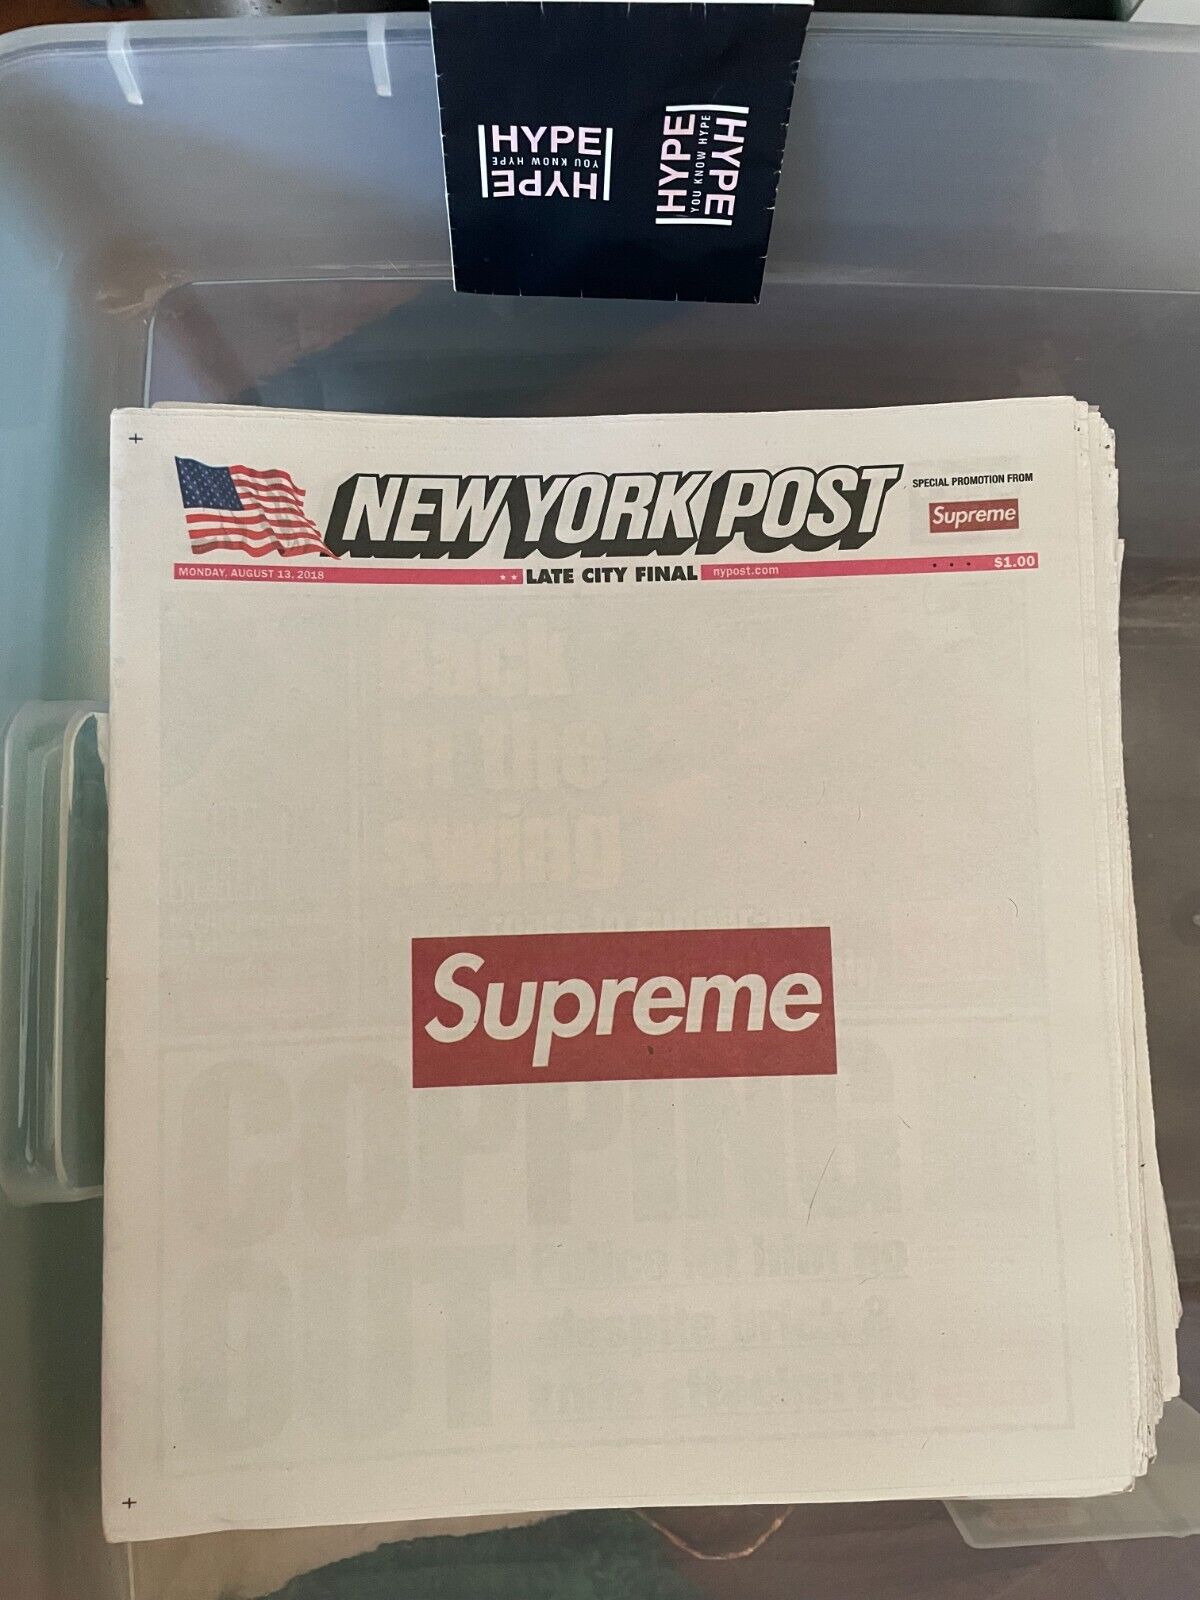 Supreme Newspaper - New York Post “Late City Final” Edition